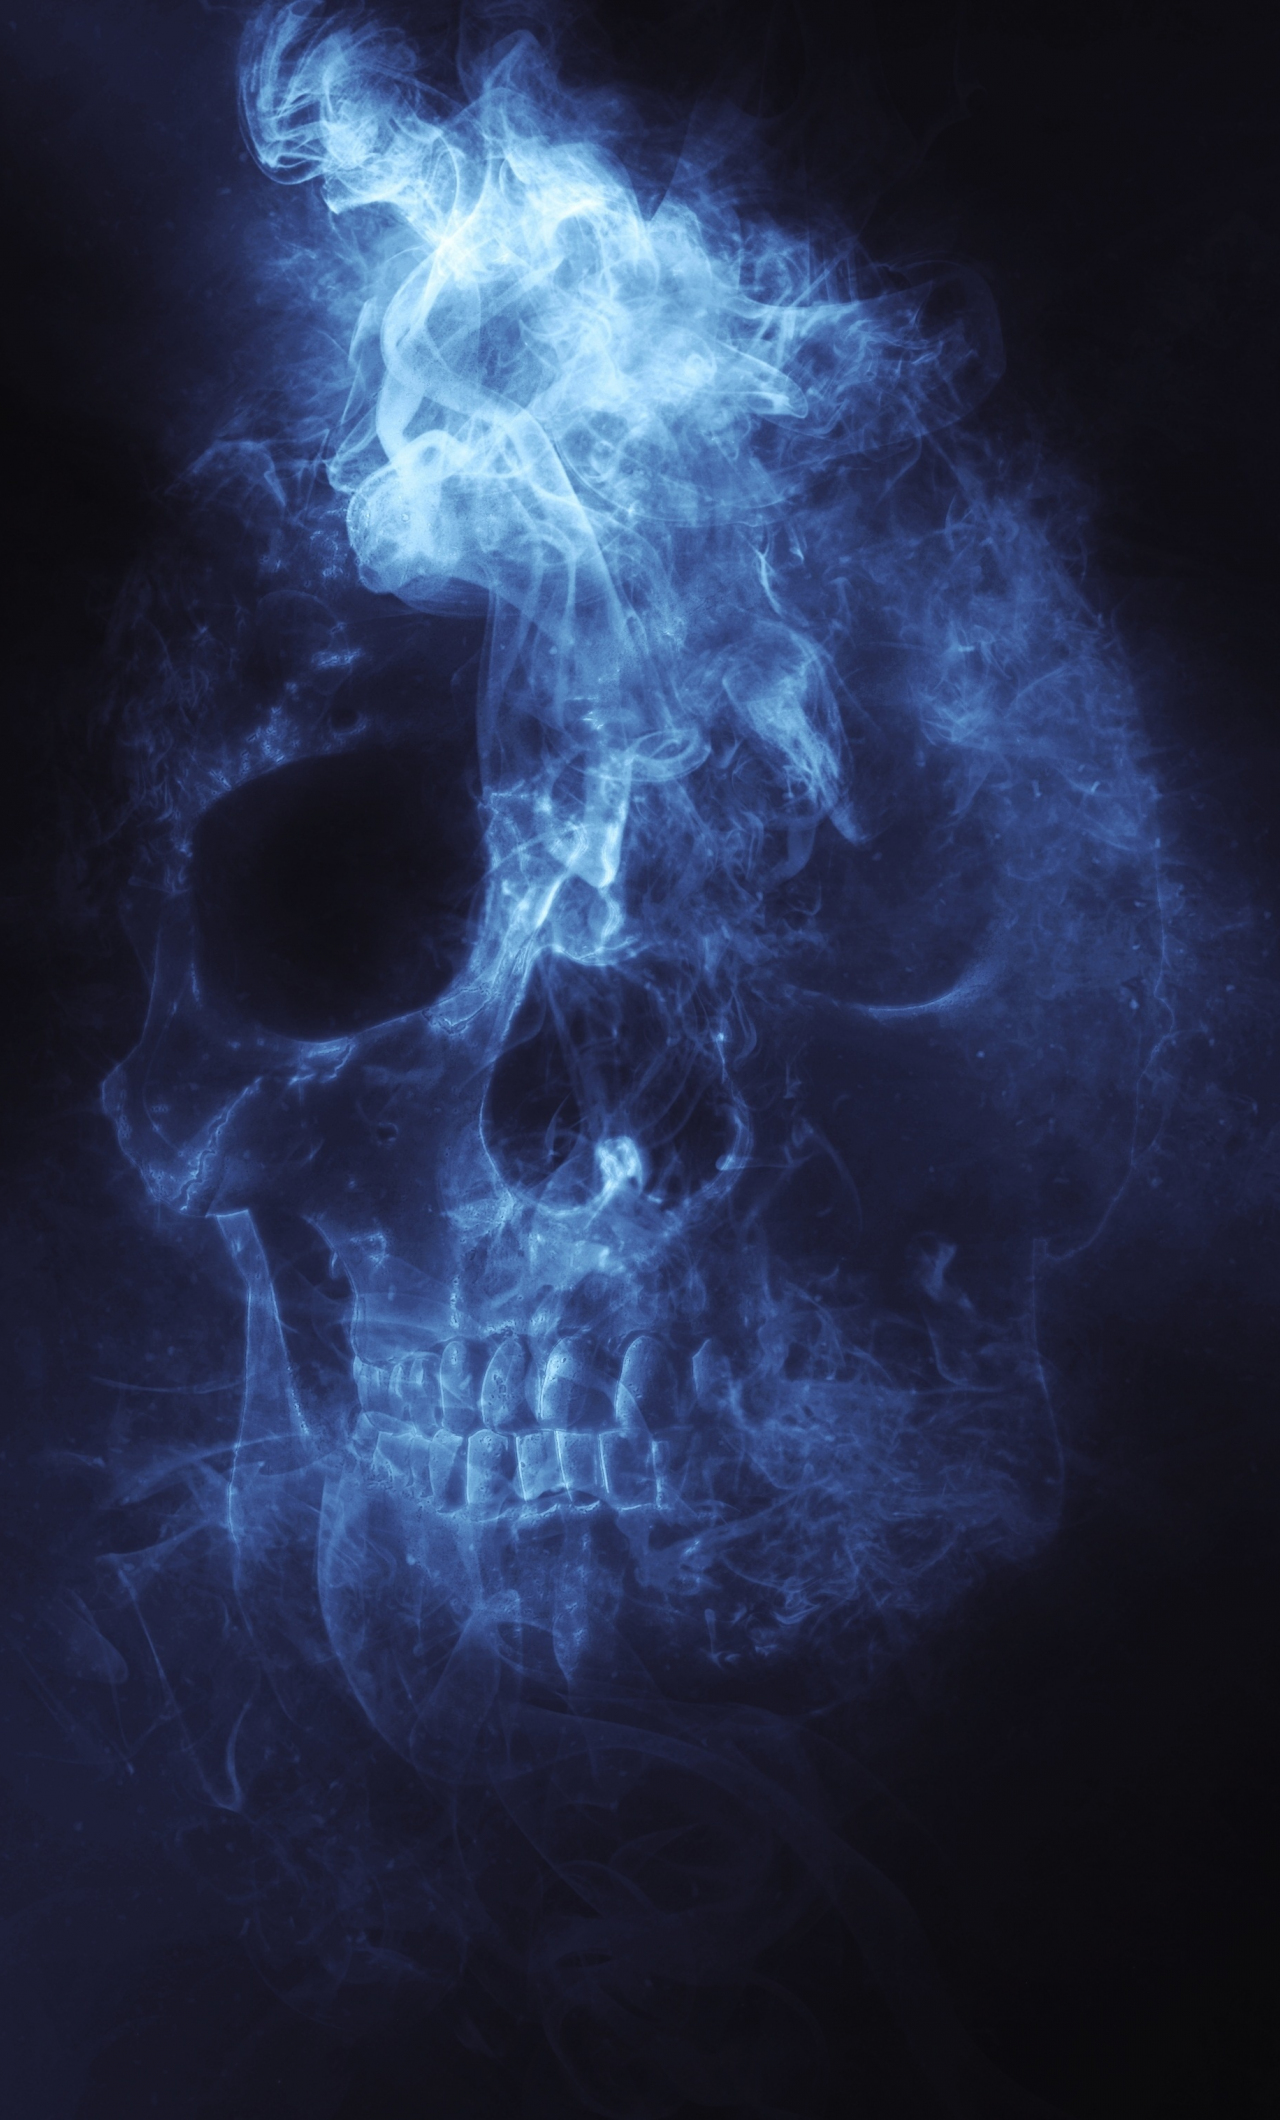 Dangerous HD Wallpaper Smoke Skull 57 images